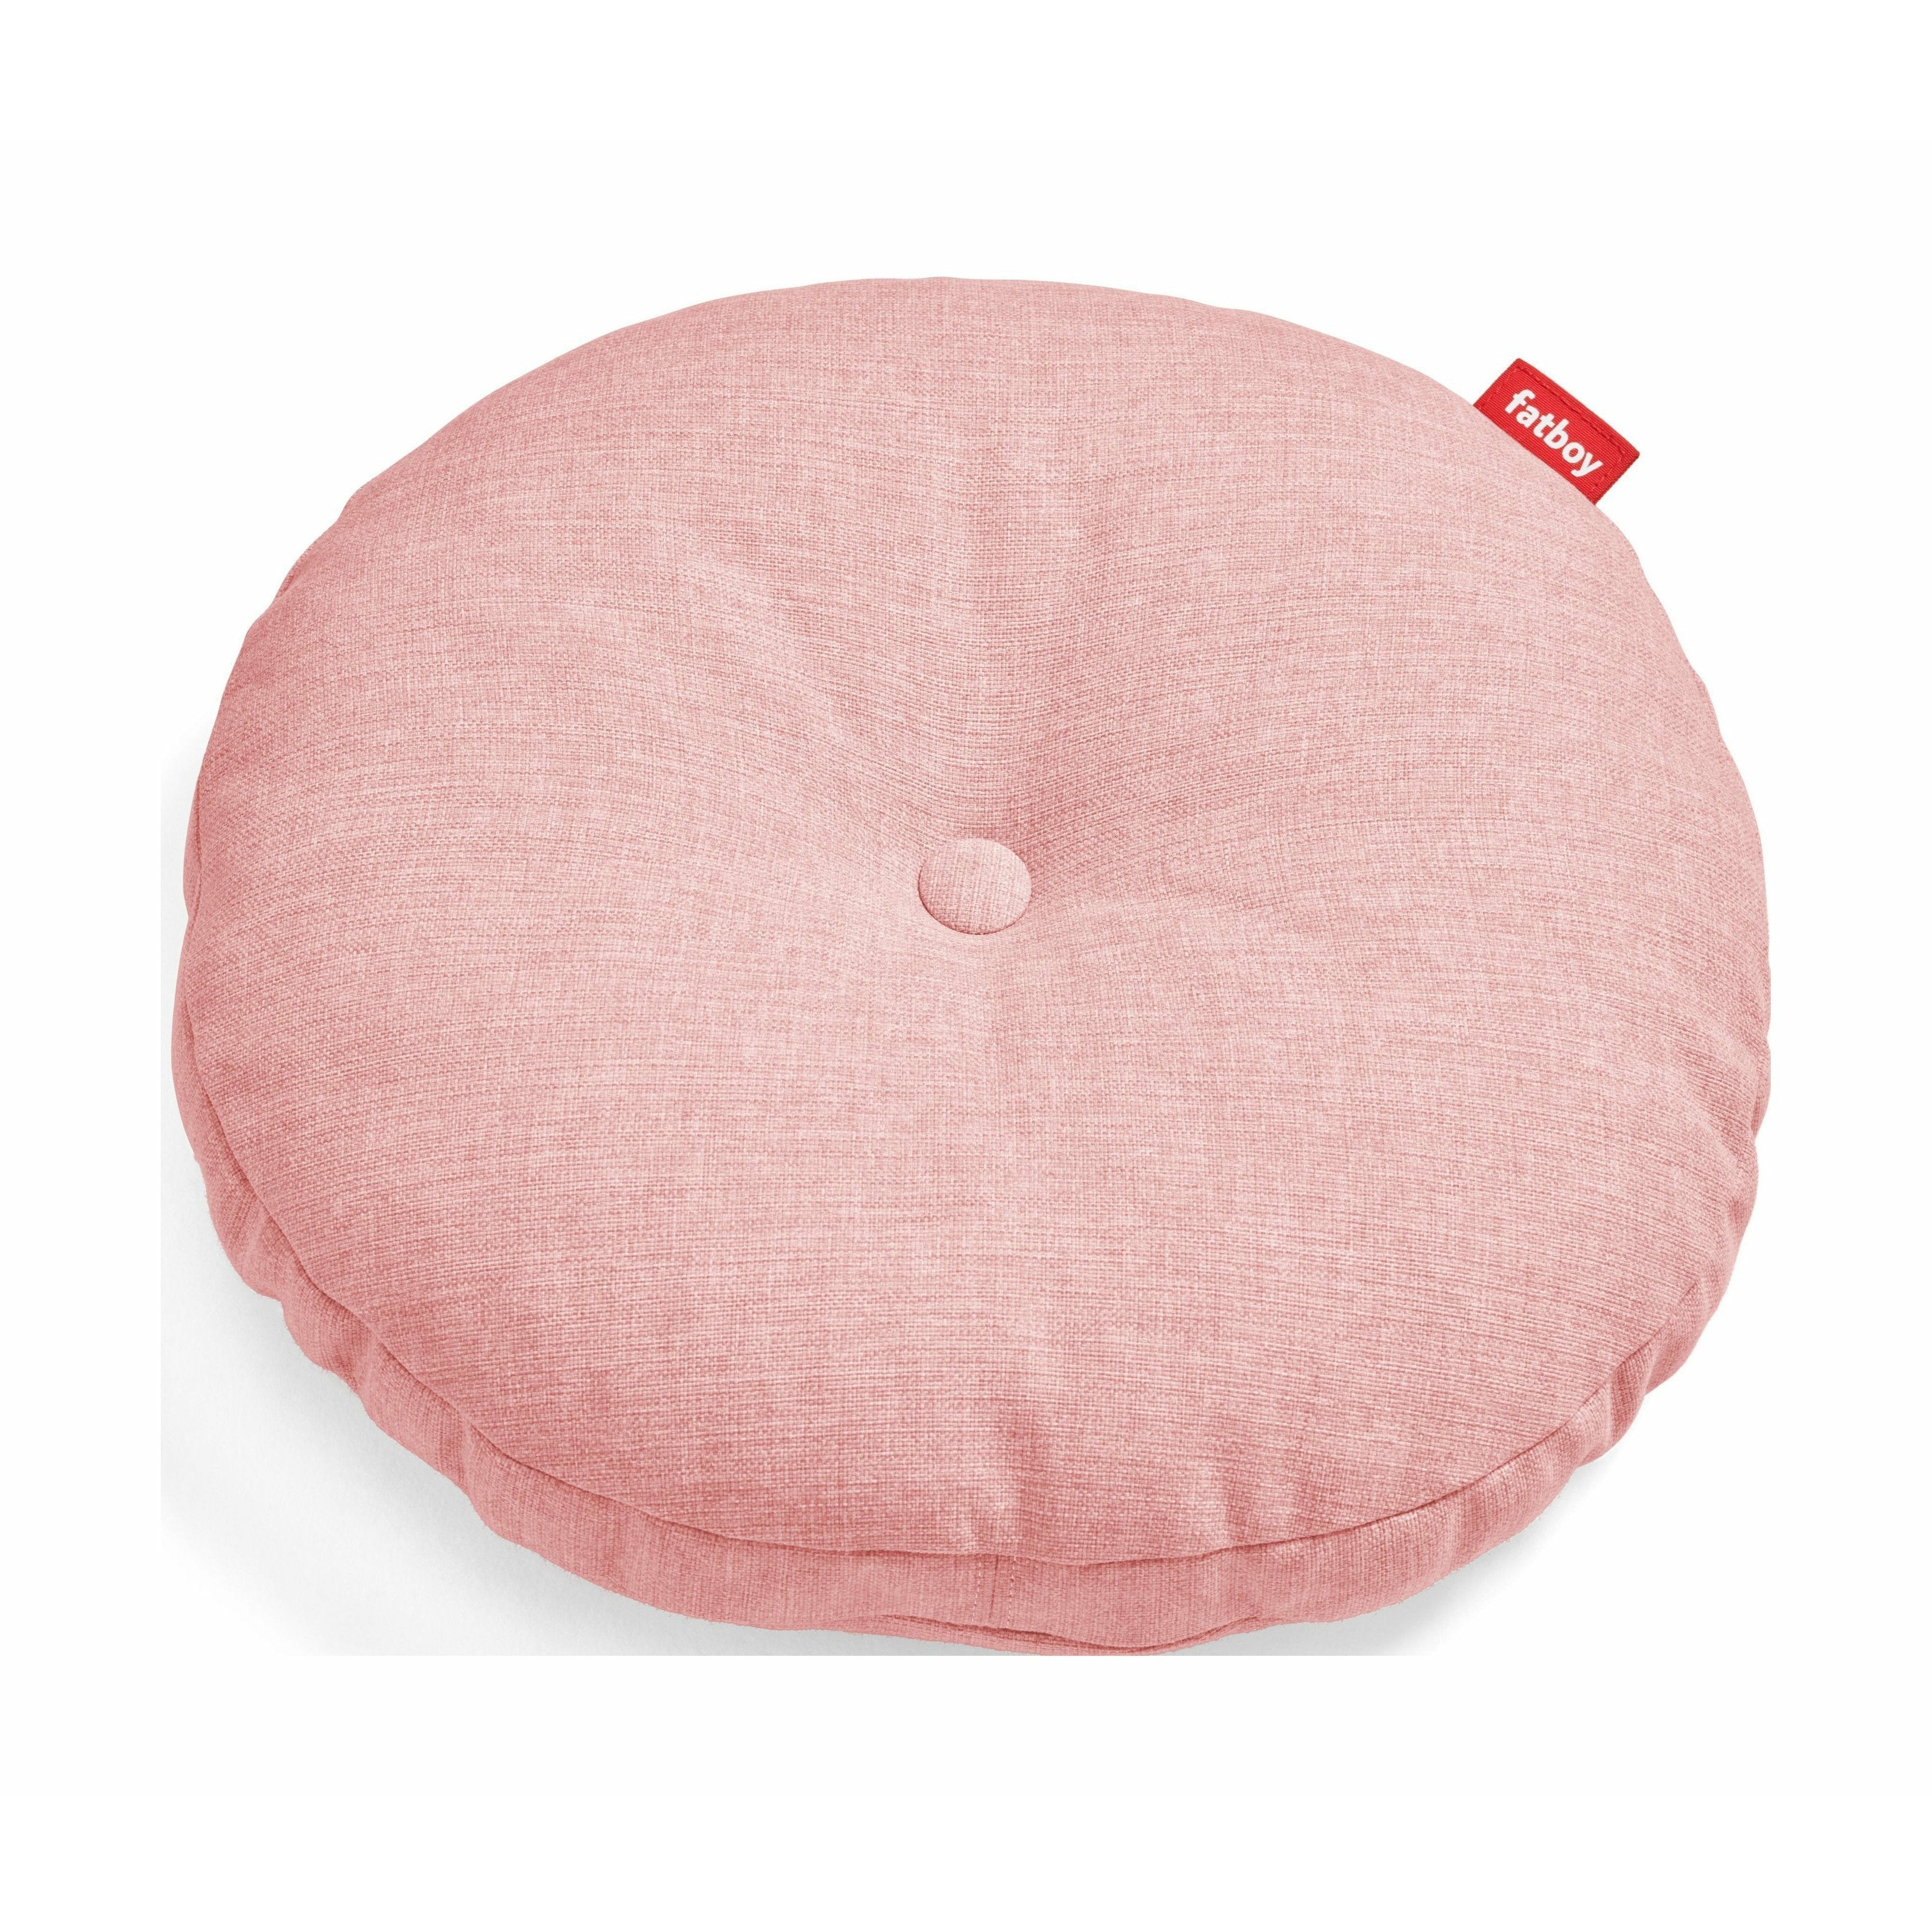 Fatboy Circle Pillow Outdoor Round Round Garden Cushion, Blossom